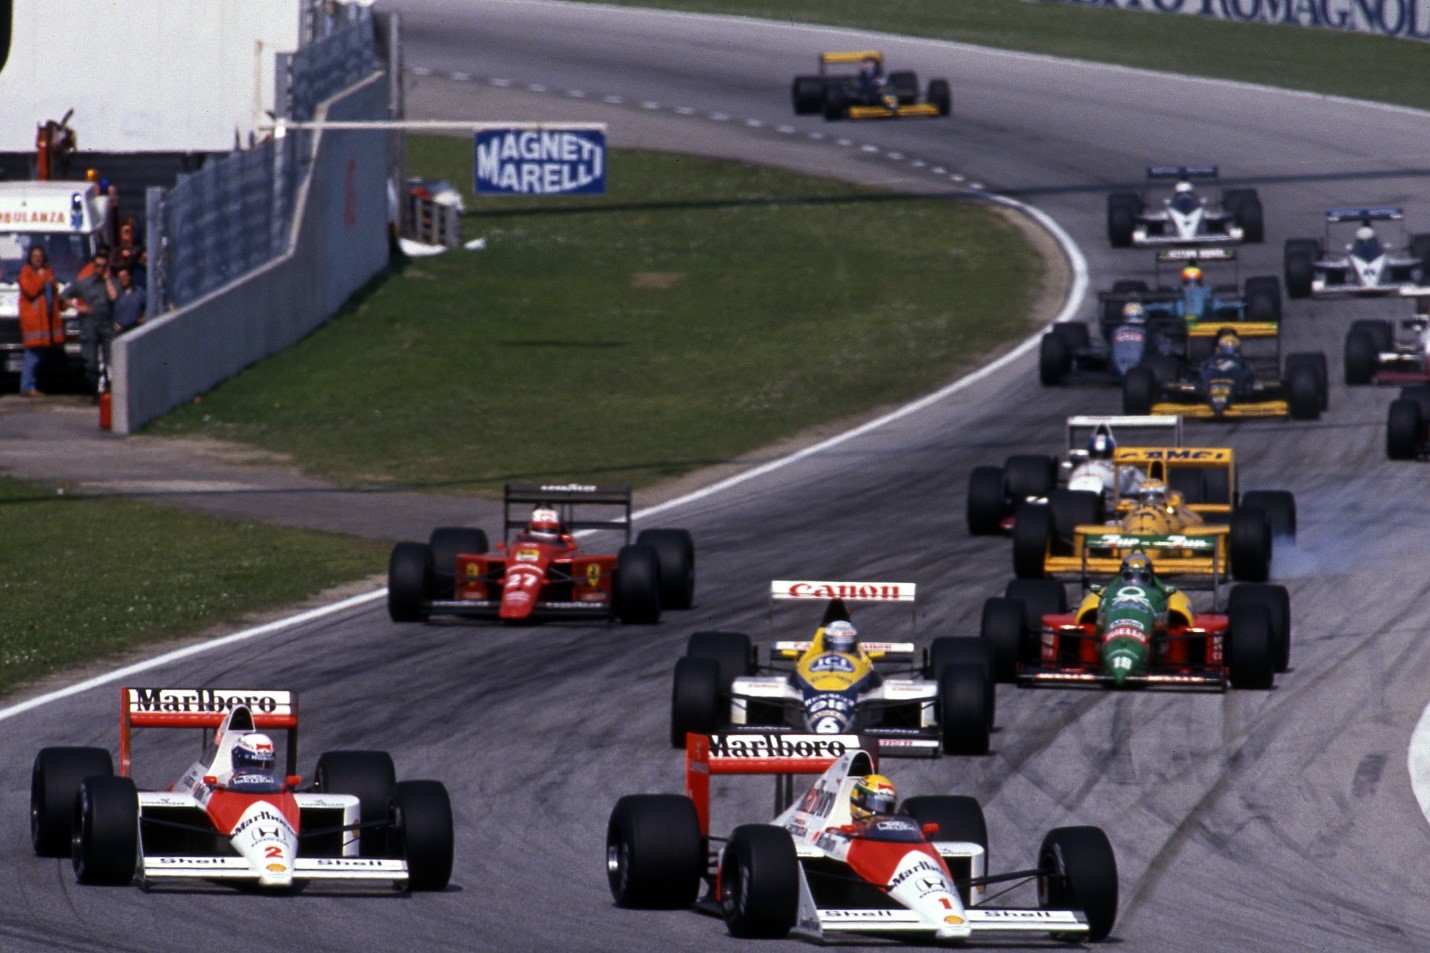 A Formula 1 race at Imola.